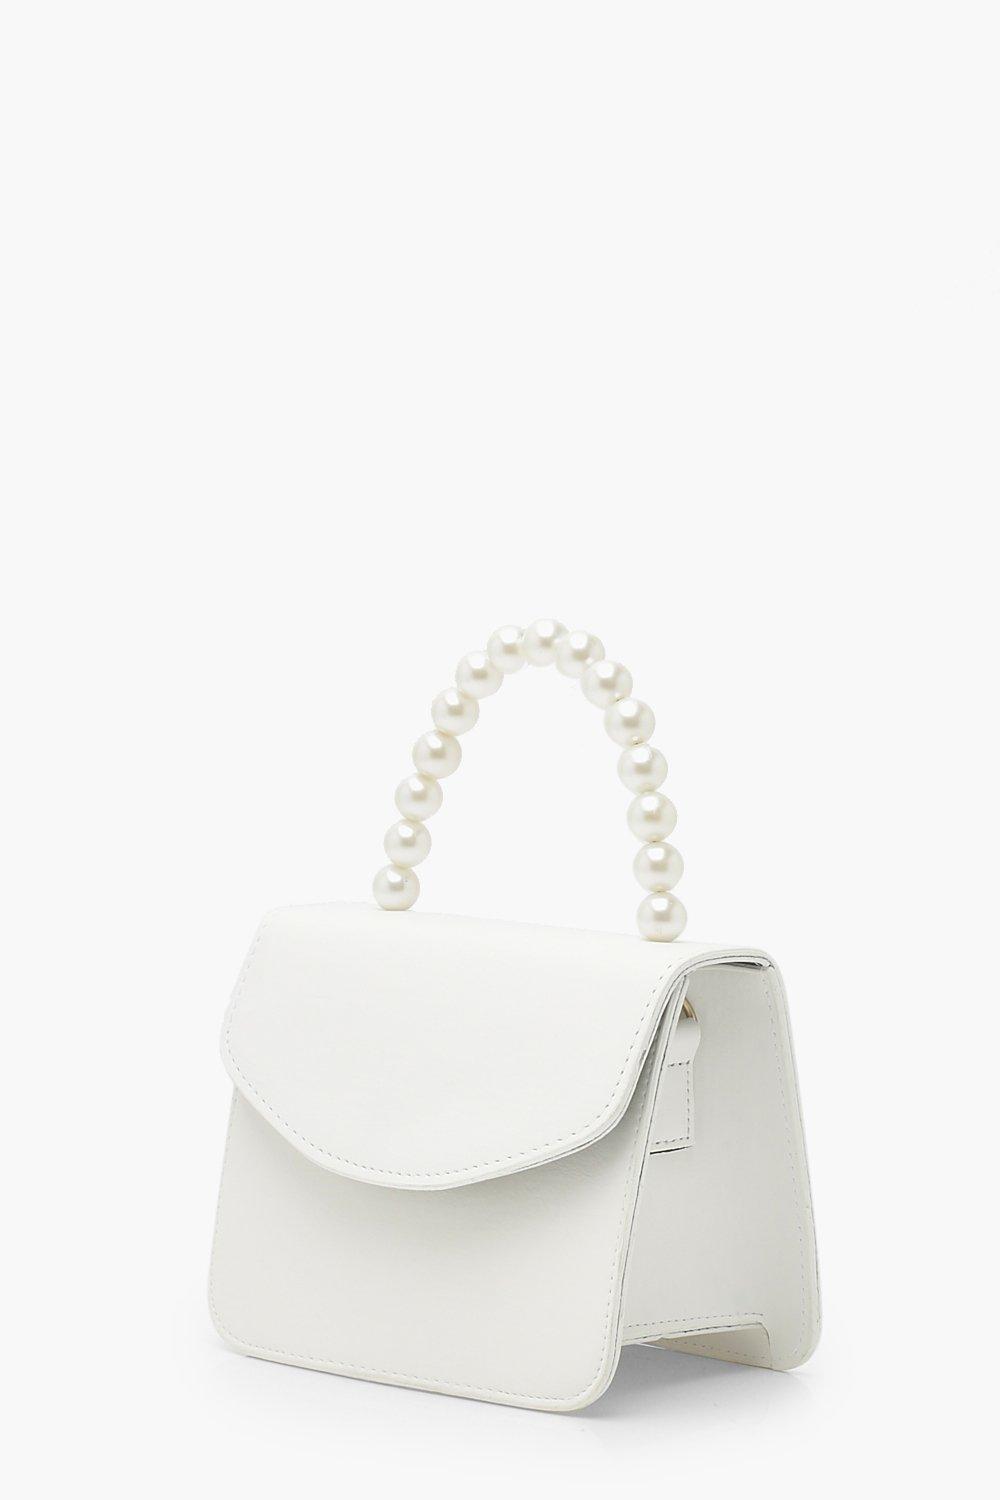 Pearl Bead Bag Strap, Pearl Bag Charm, Ivory Tote Handle, Pearl